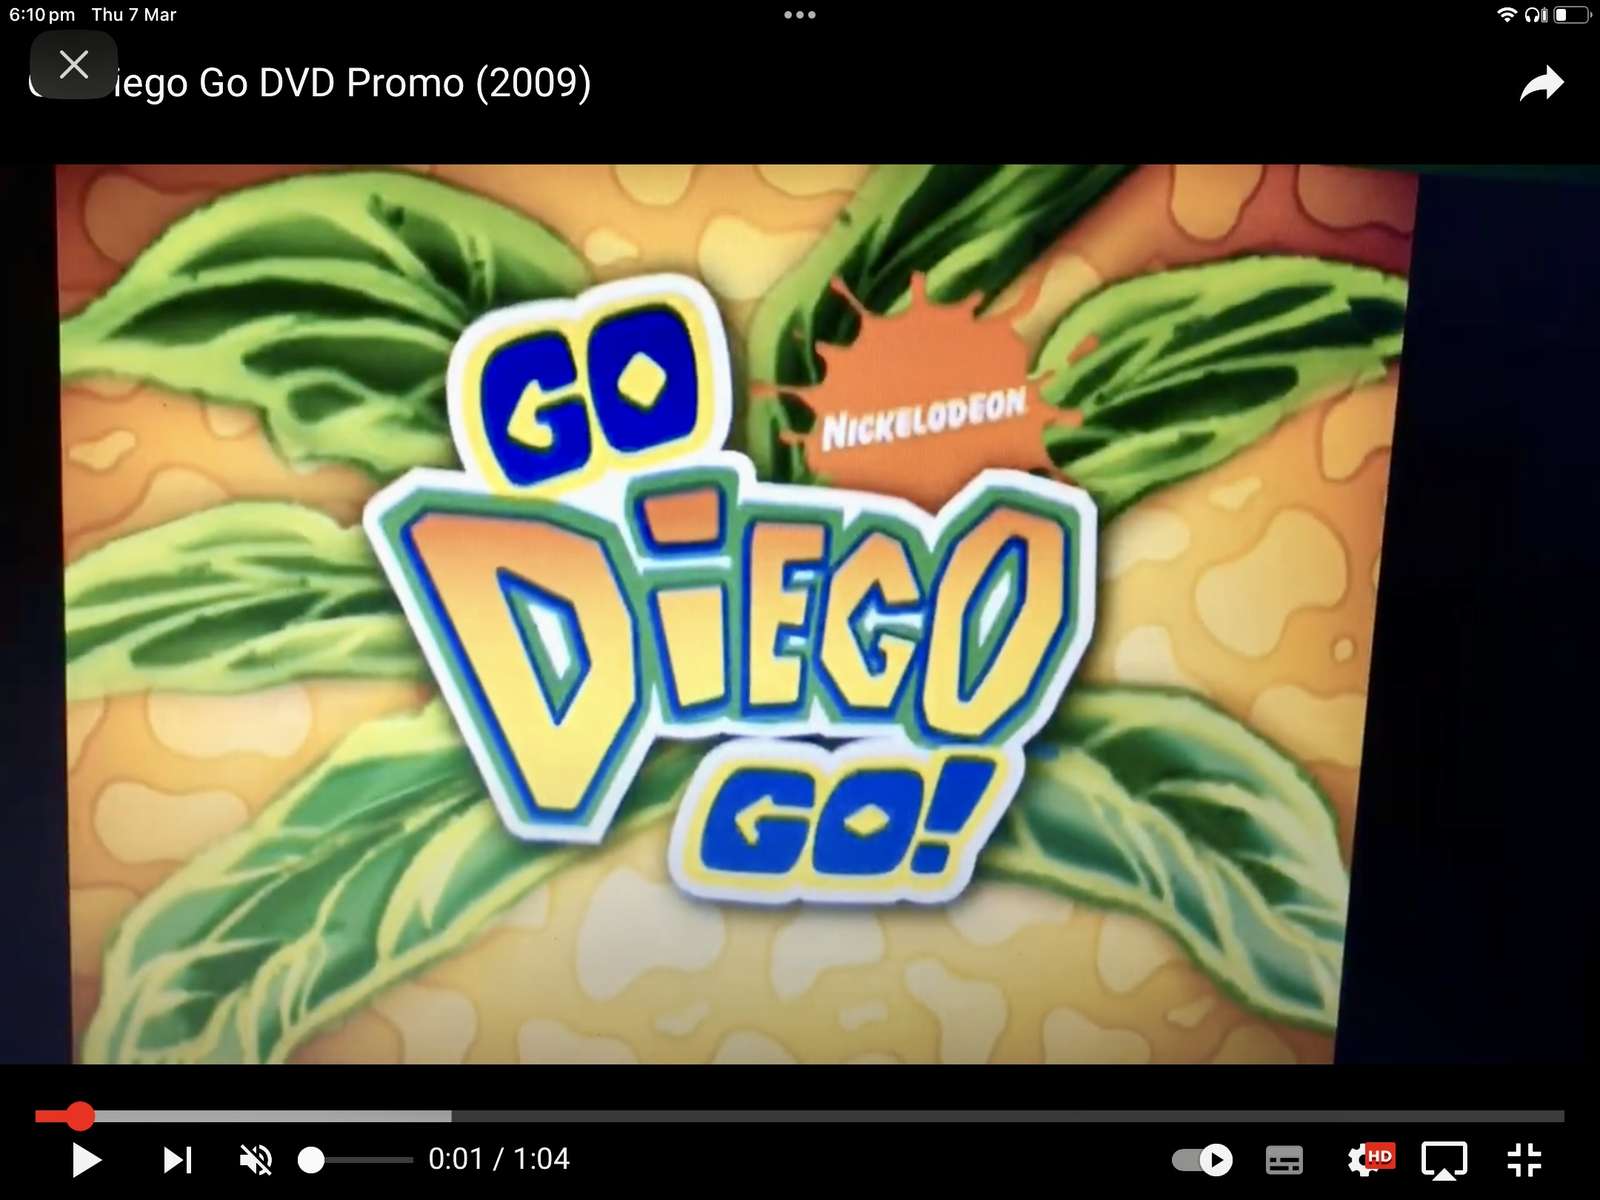 vai Diego, vai al dvd promo 2009 puzzle online da foto